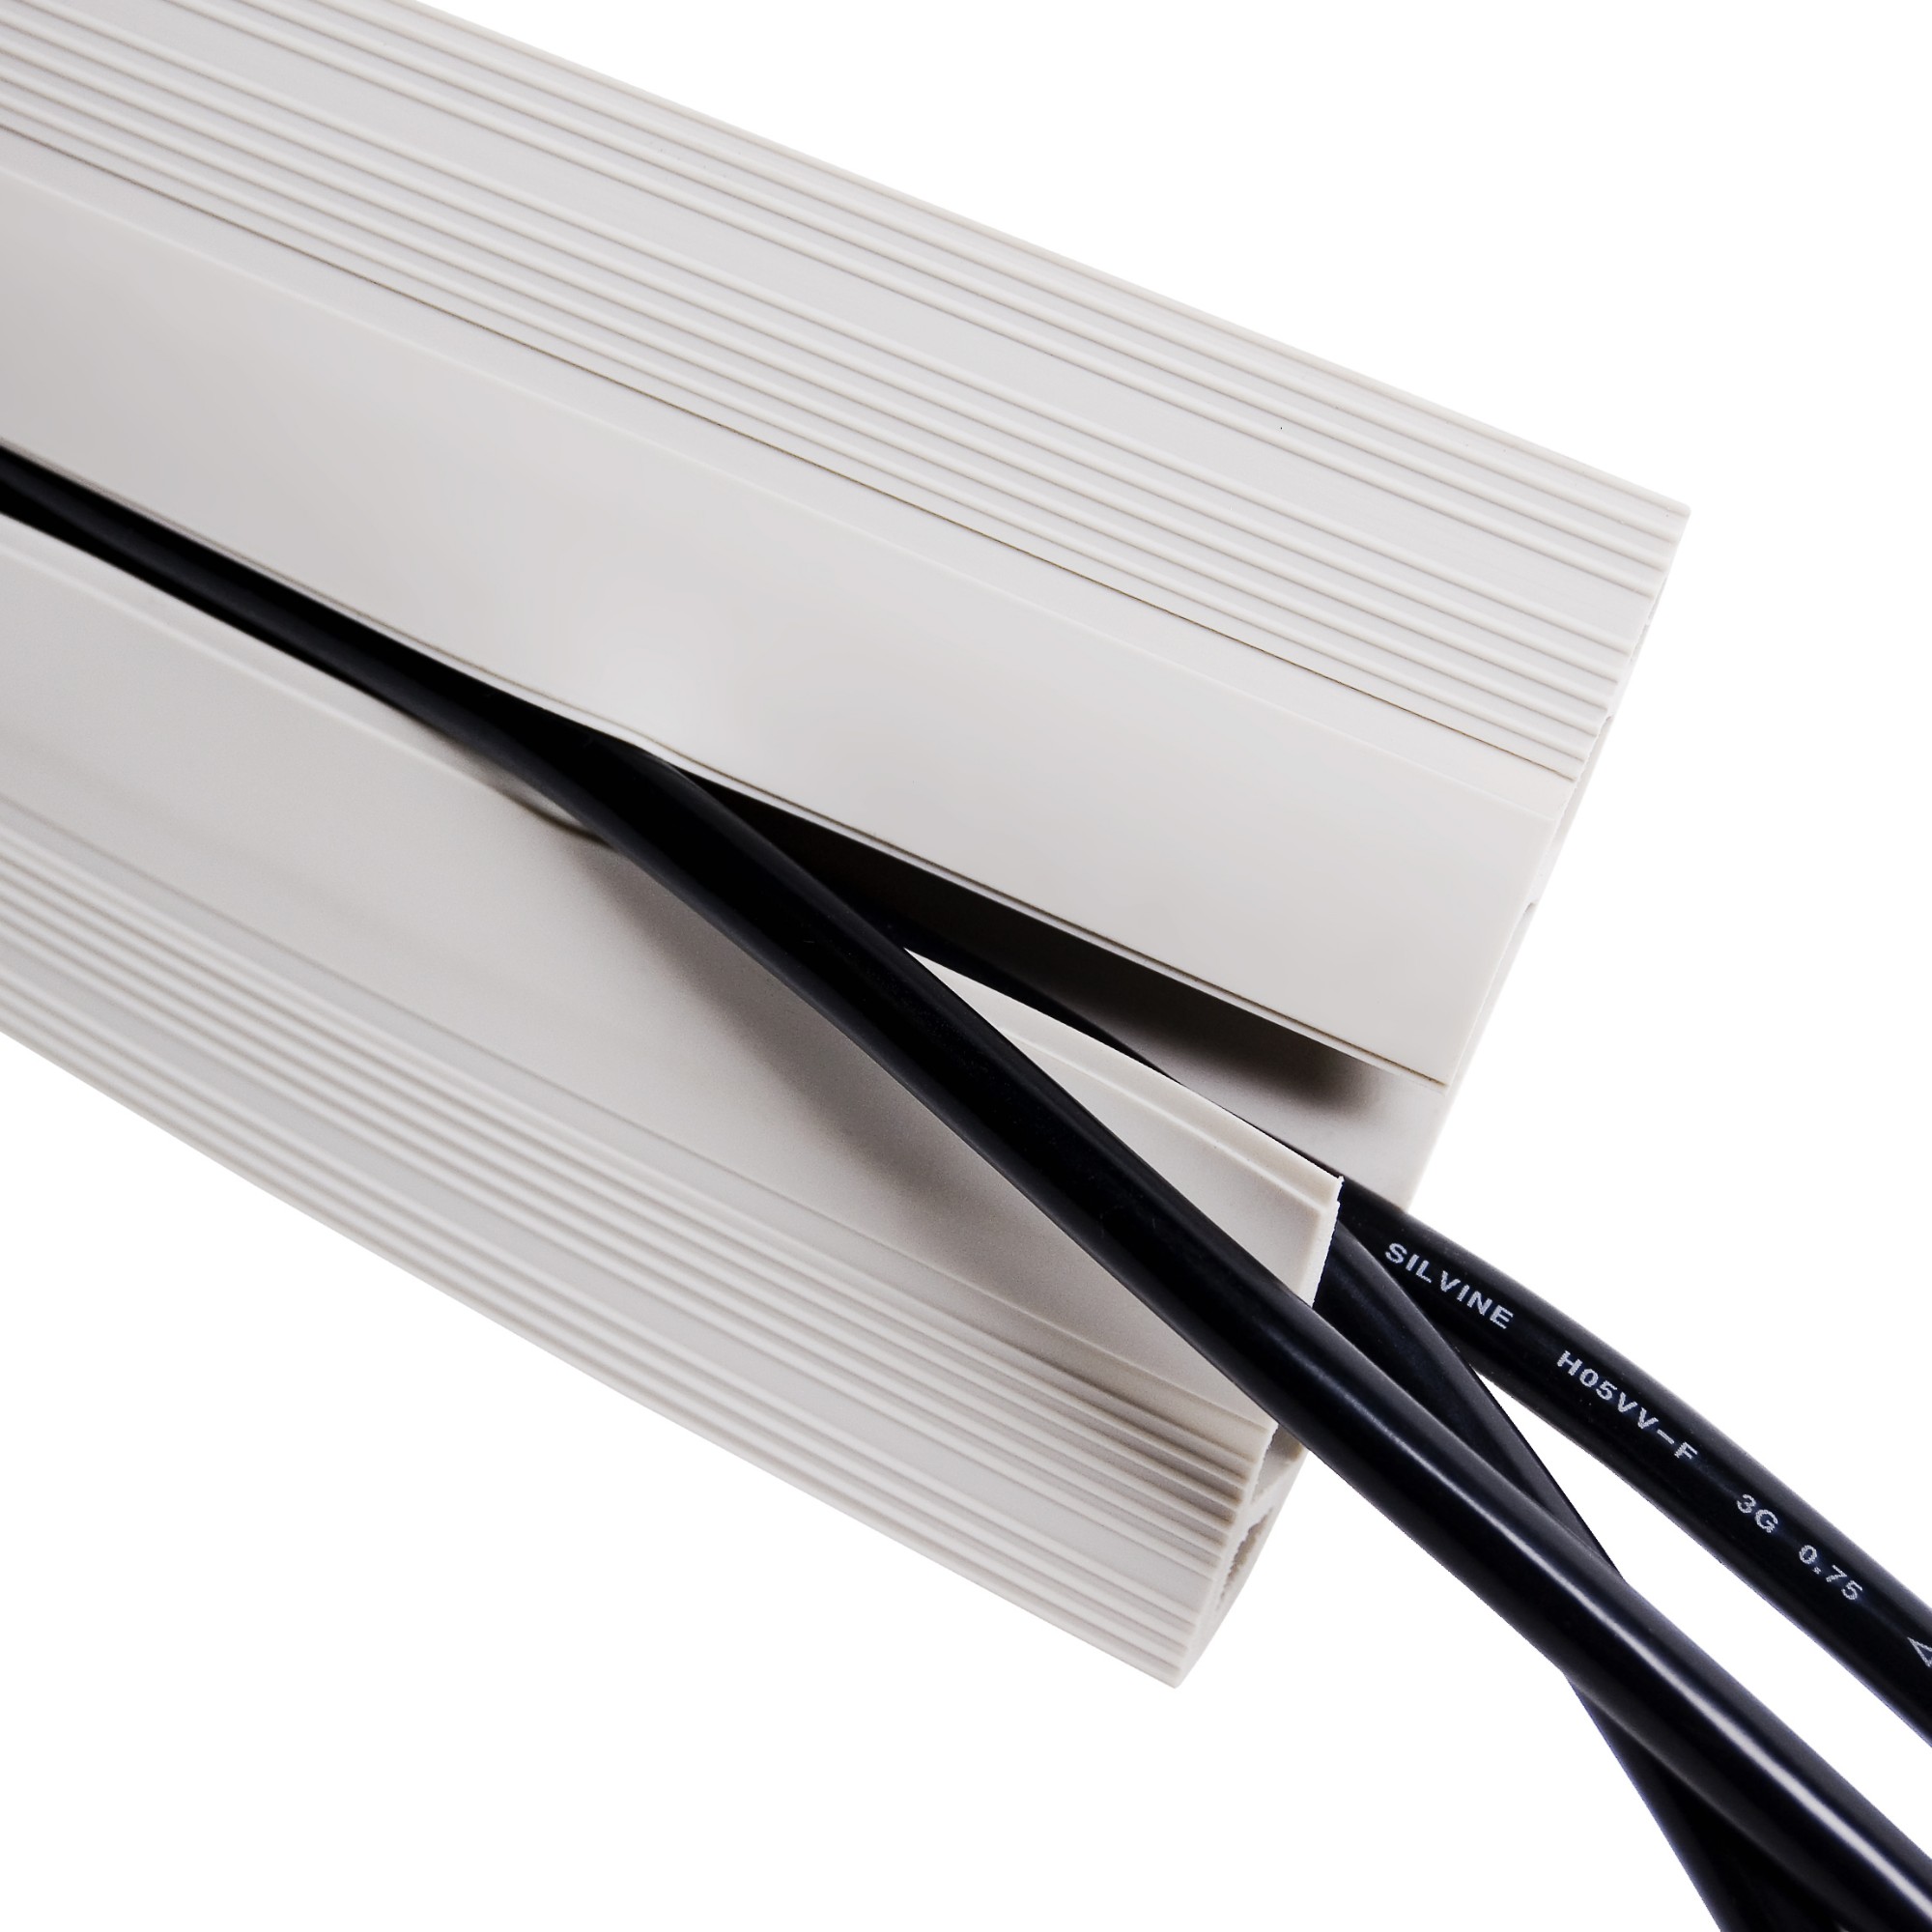 Dataflex Addit cable protector 300 cm 300